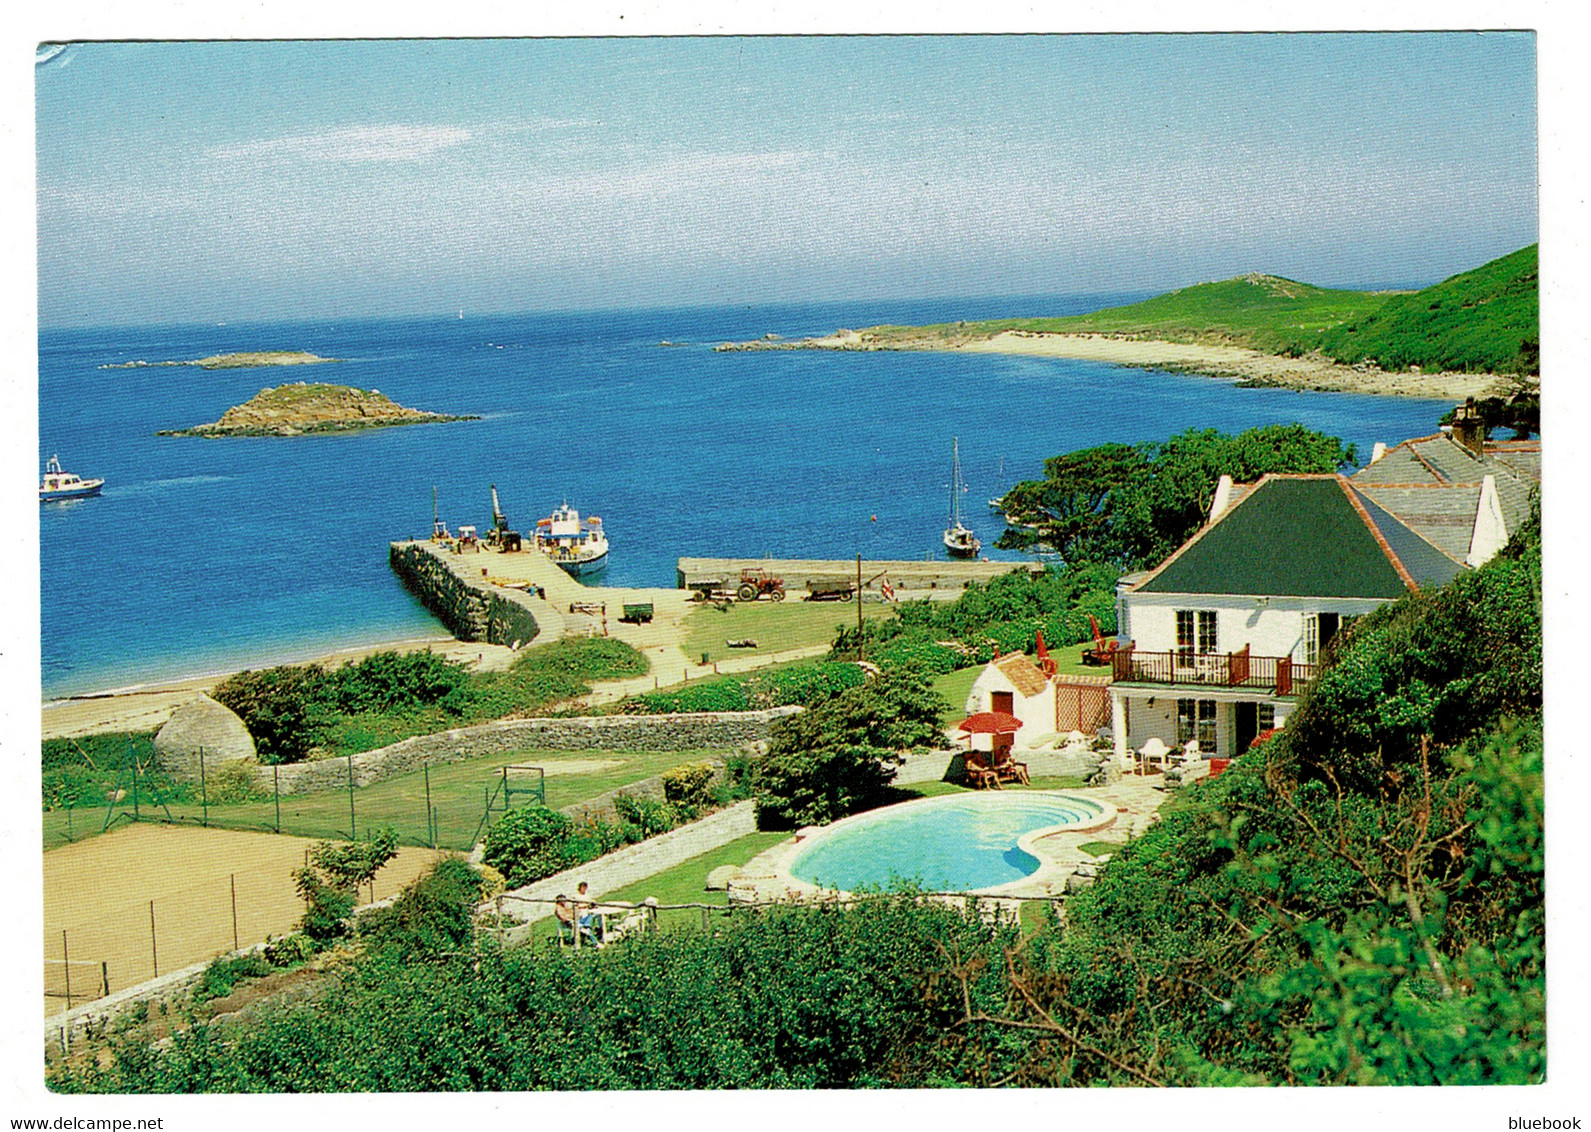 Ref 1397 - Postcard - Herm Island Harbour & White Horse Hotel - Guernsey Channel Islands - Herm